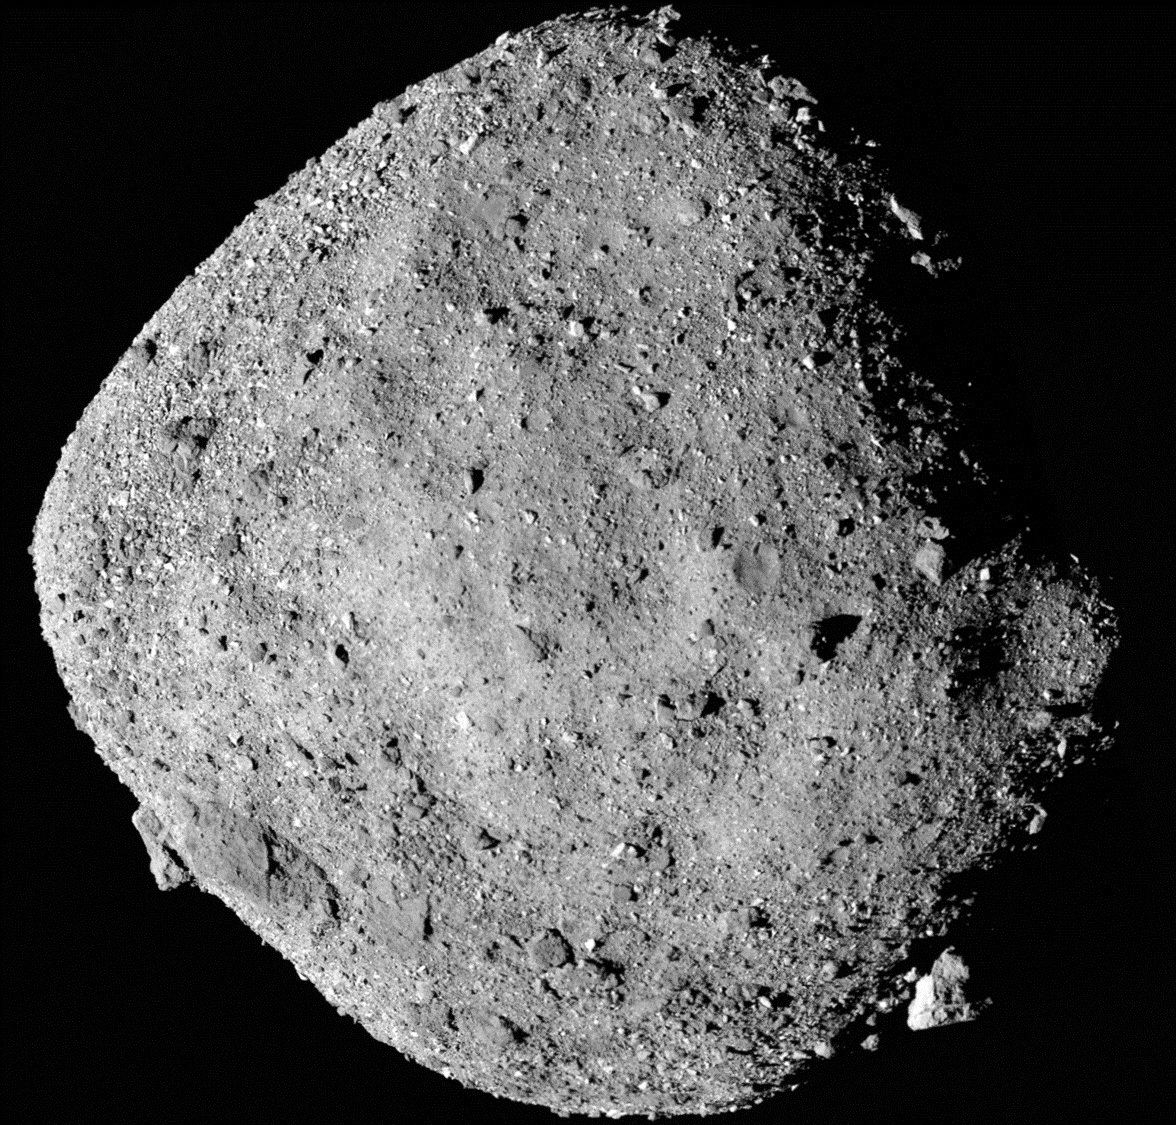 Asteroid Bennu / Reuters